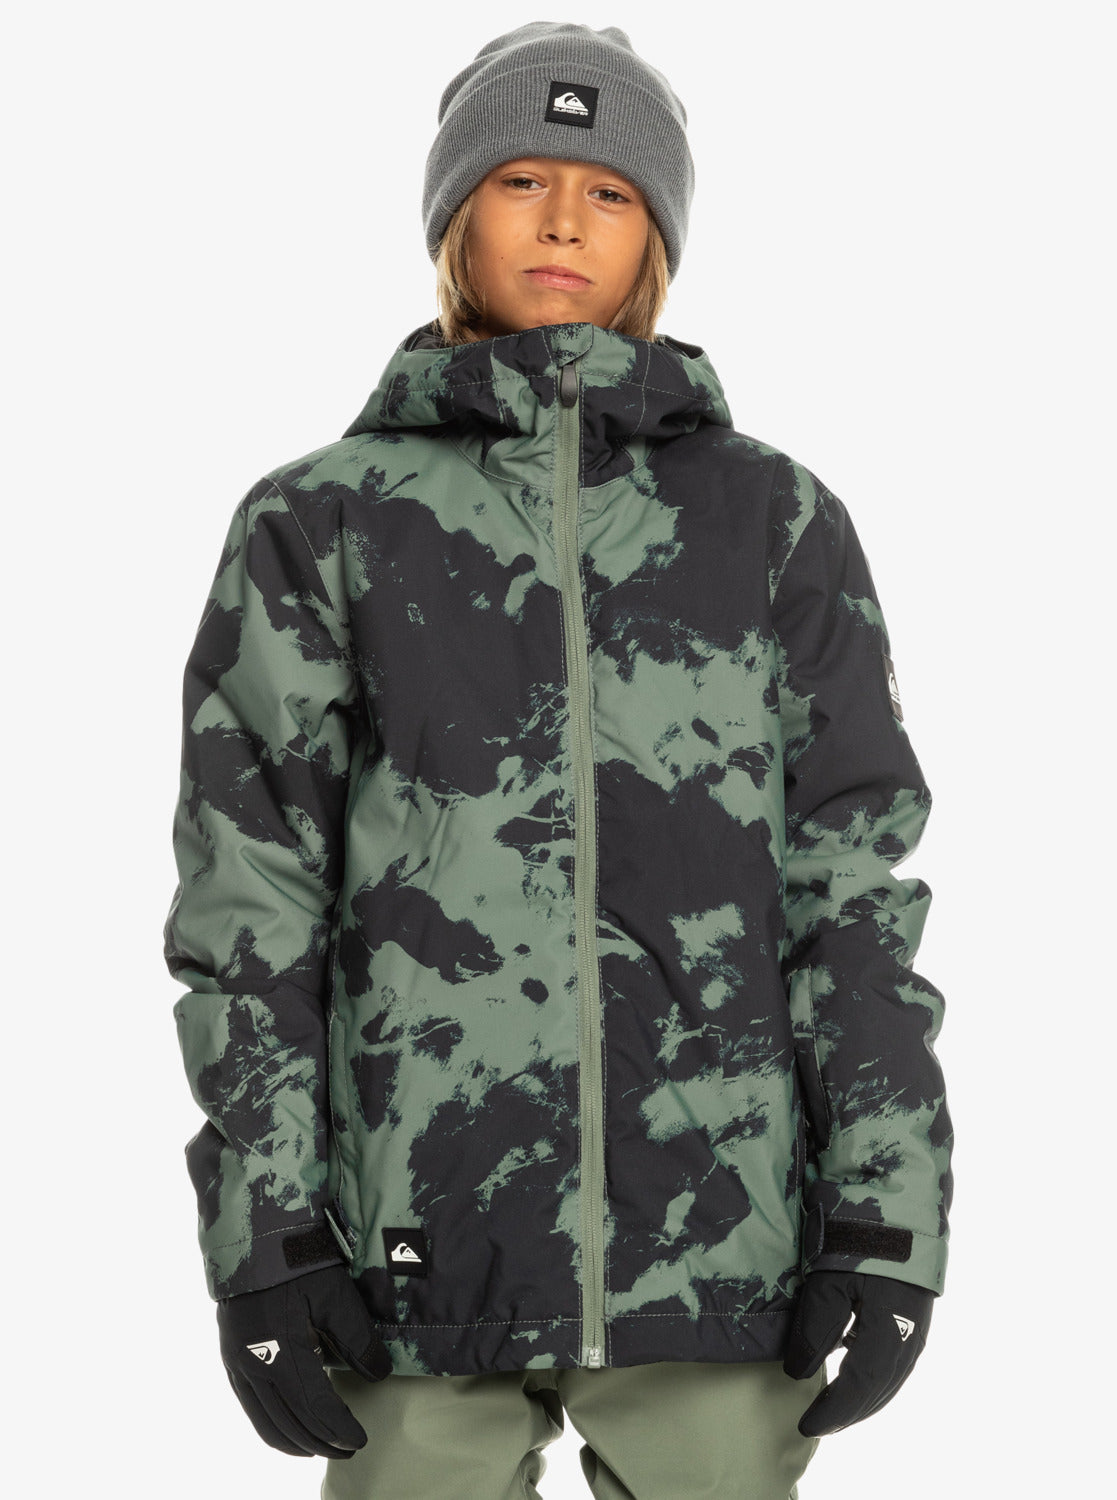 Boys 8-16 Mission Printed Technical Snow Jacket - Tye Dye Laurel Wreat